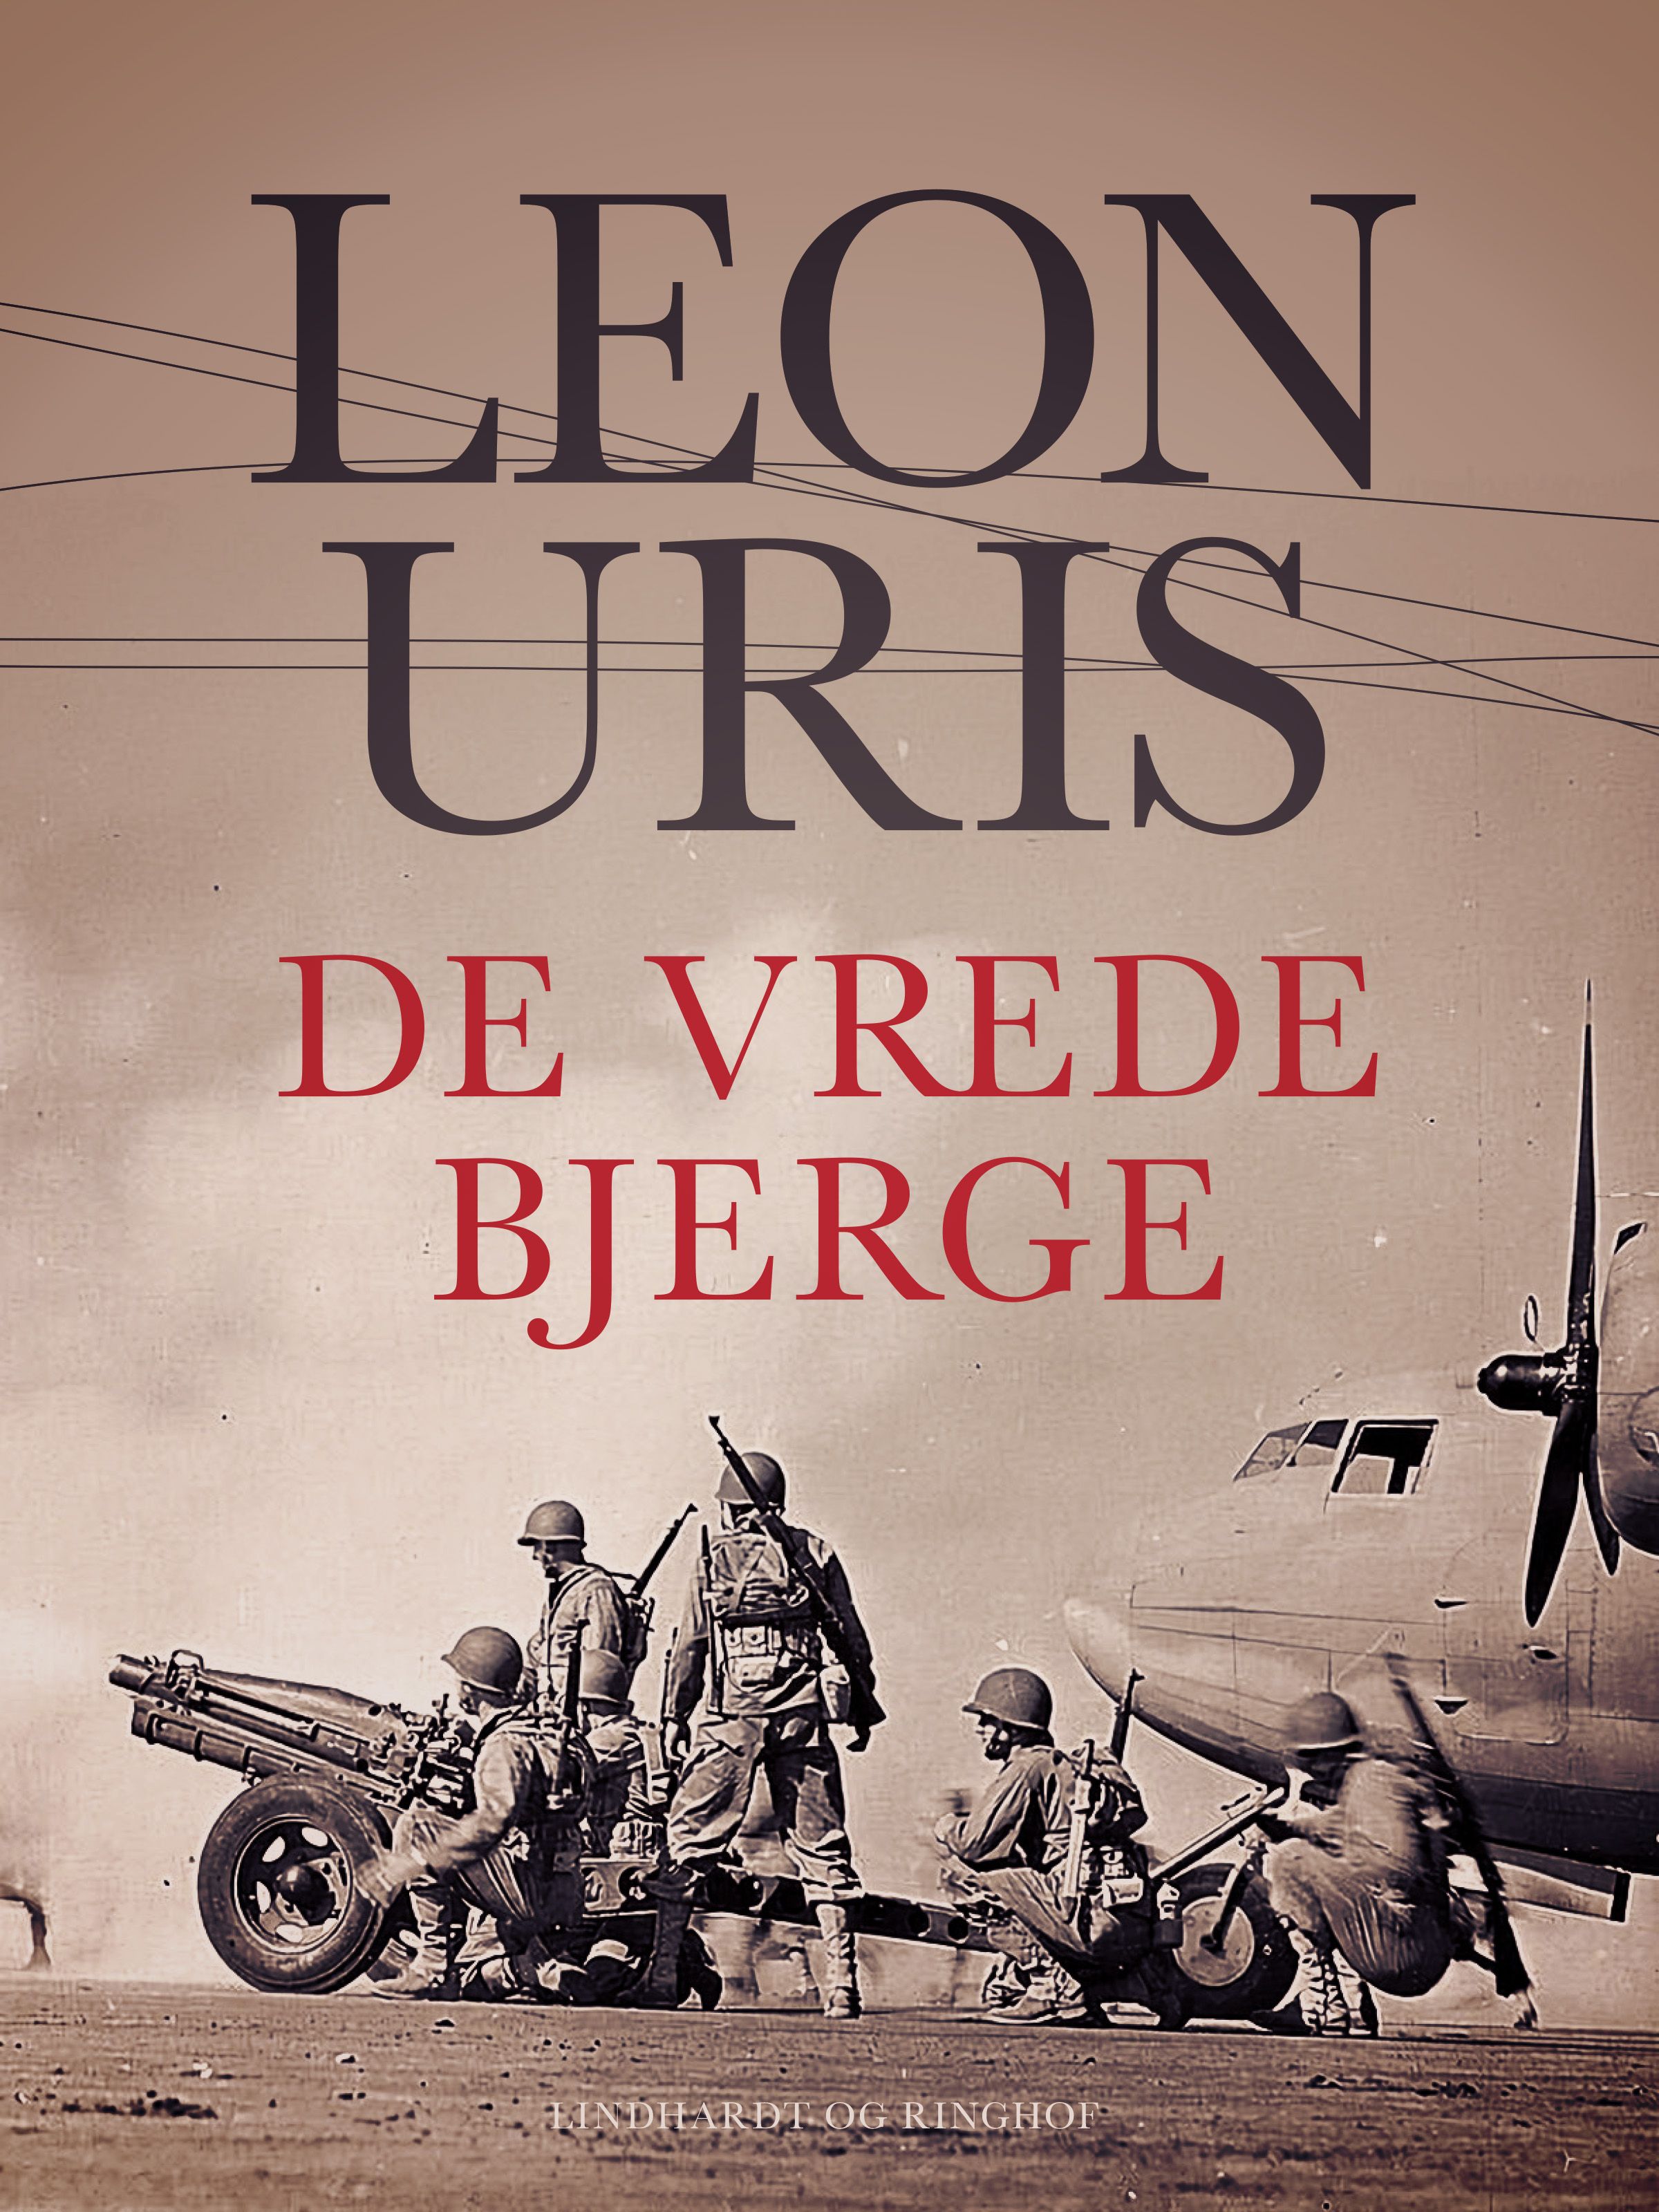 De vrede bjerge, e-bok av Leon M Uris